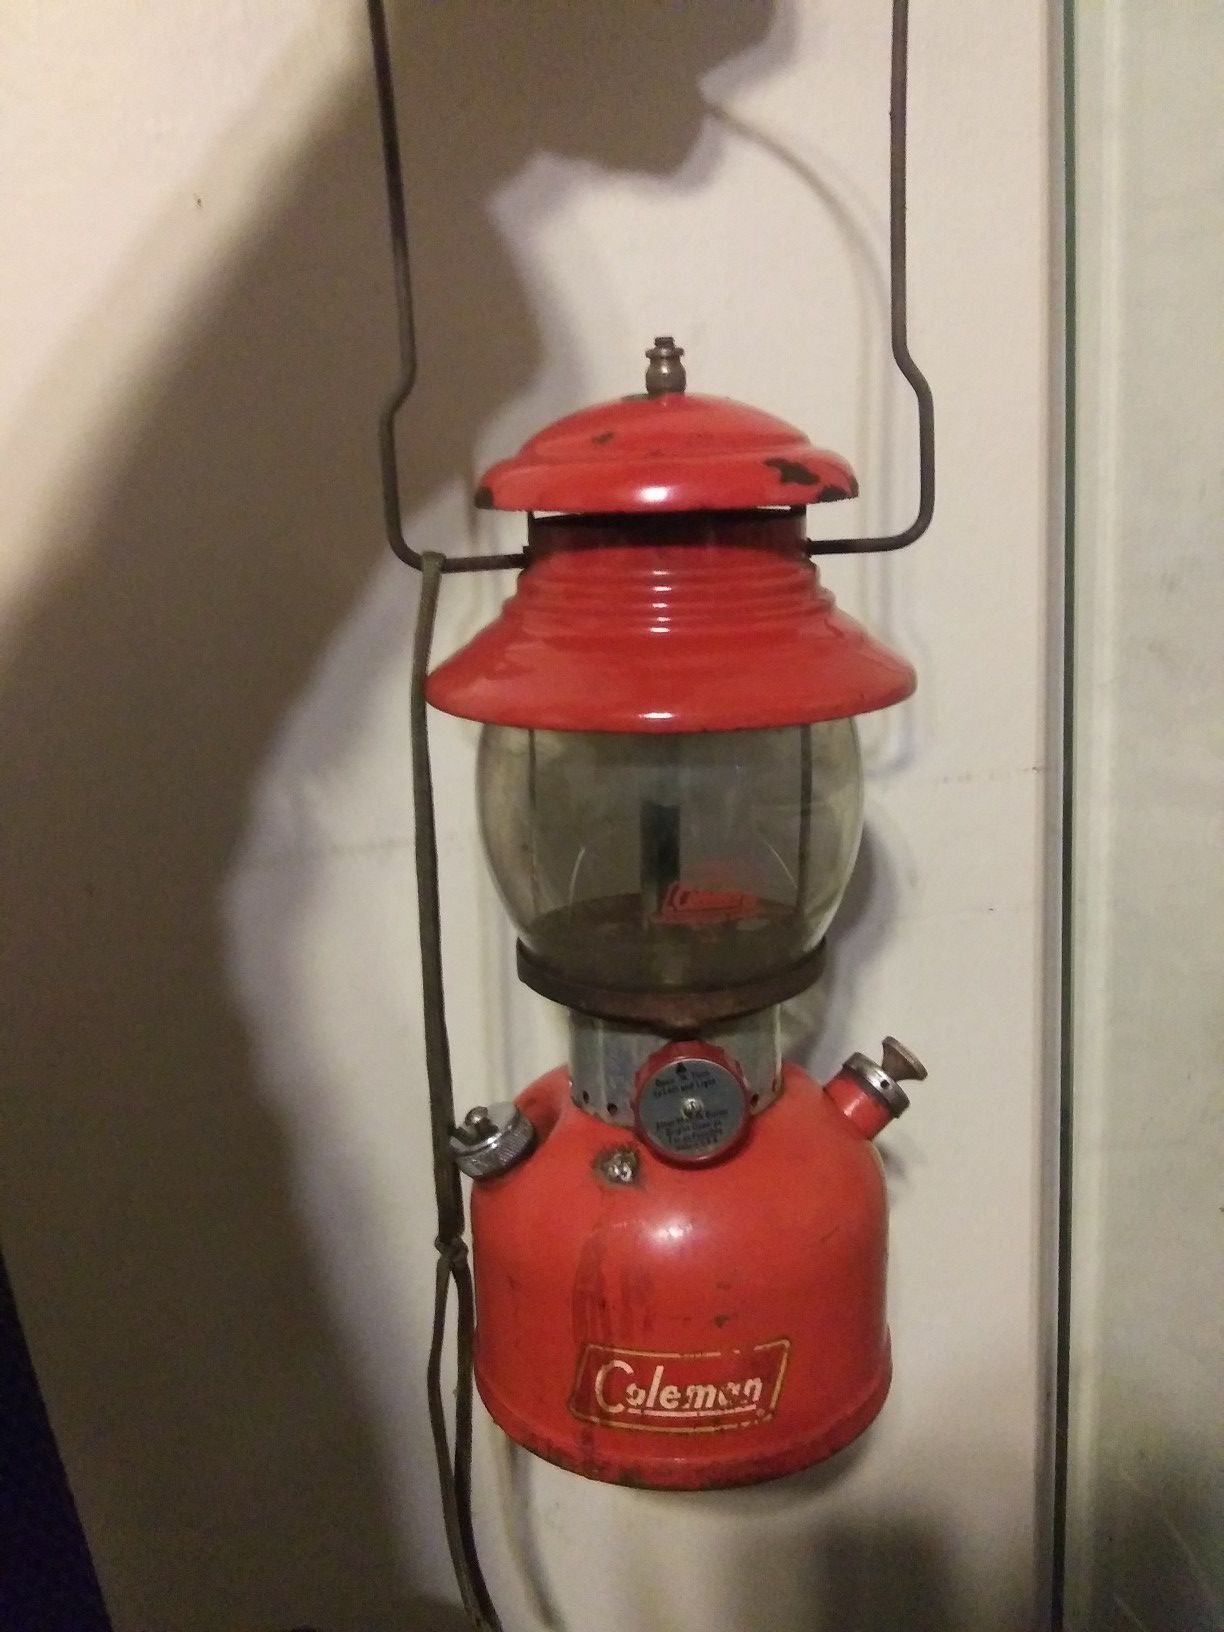 1959 Coleman lantern. It dose work